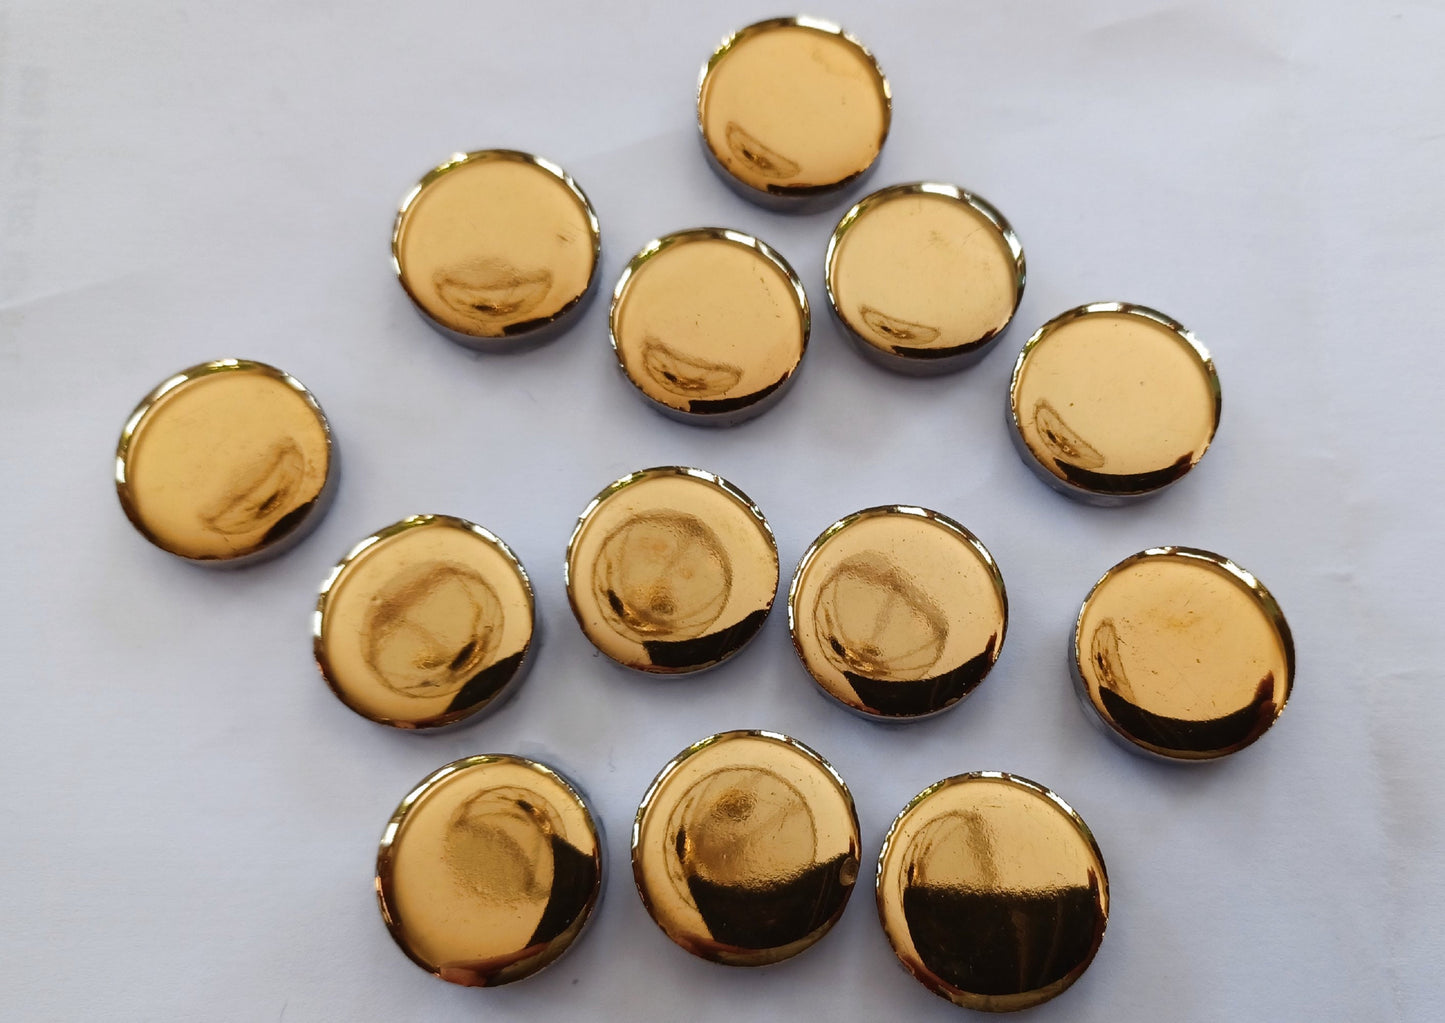 Gold Circles Mosaic Tiles -Metallic 2 cm Penny Rounds - .8 inch - 25 Tiles